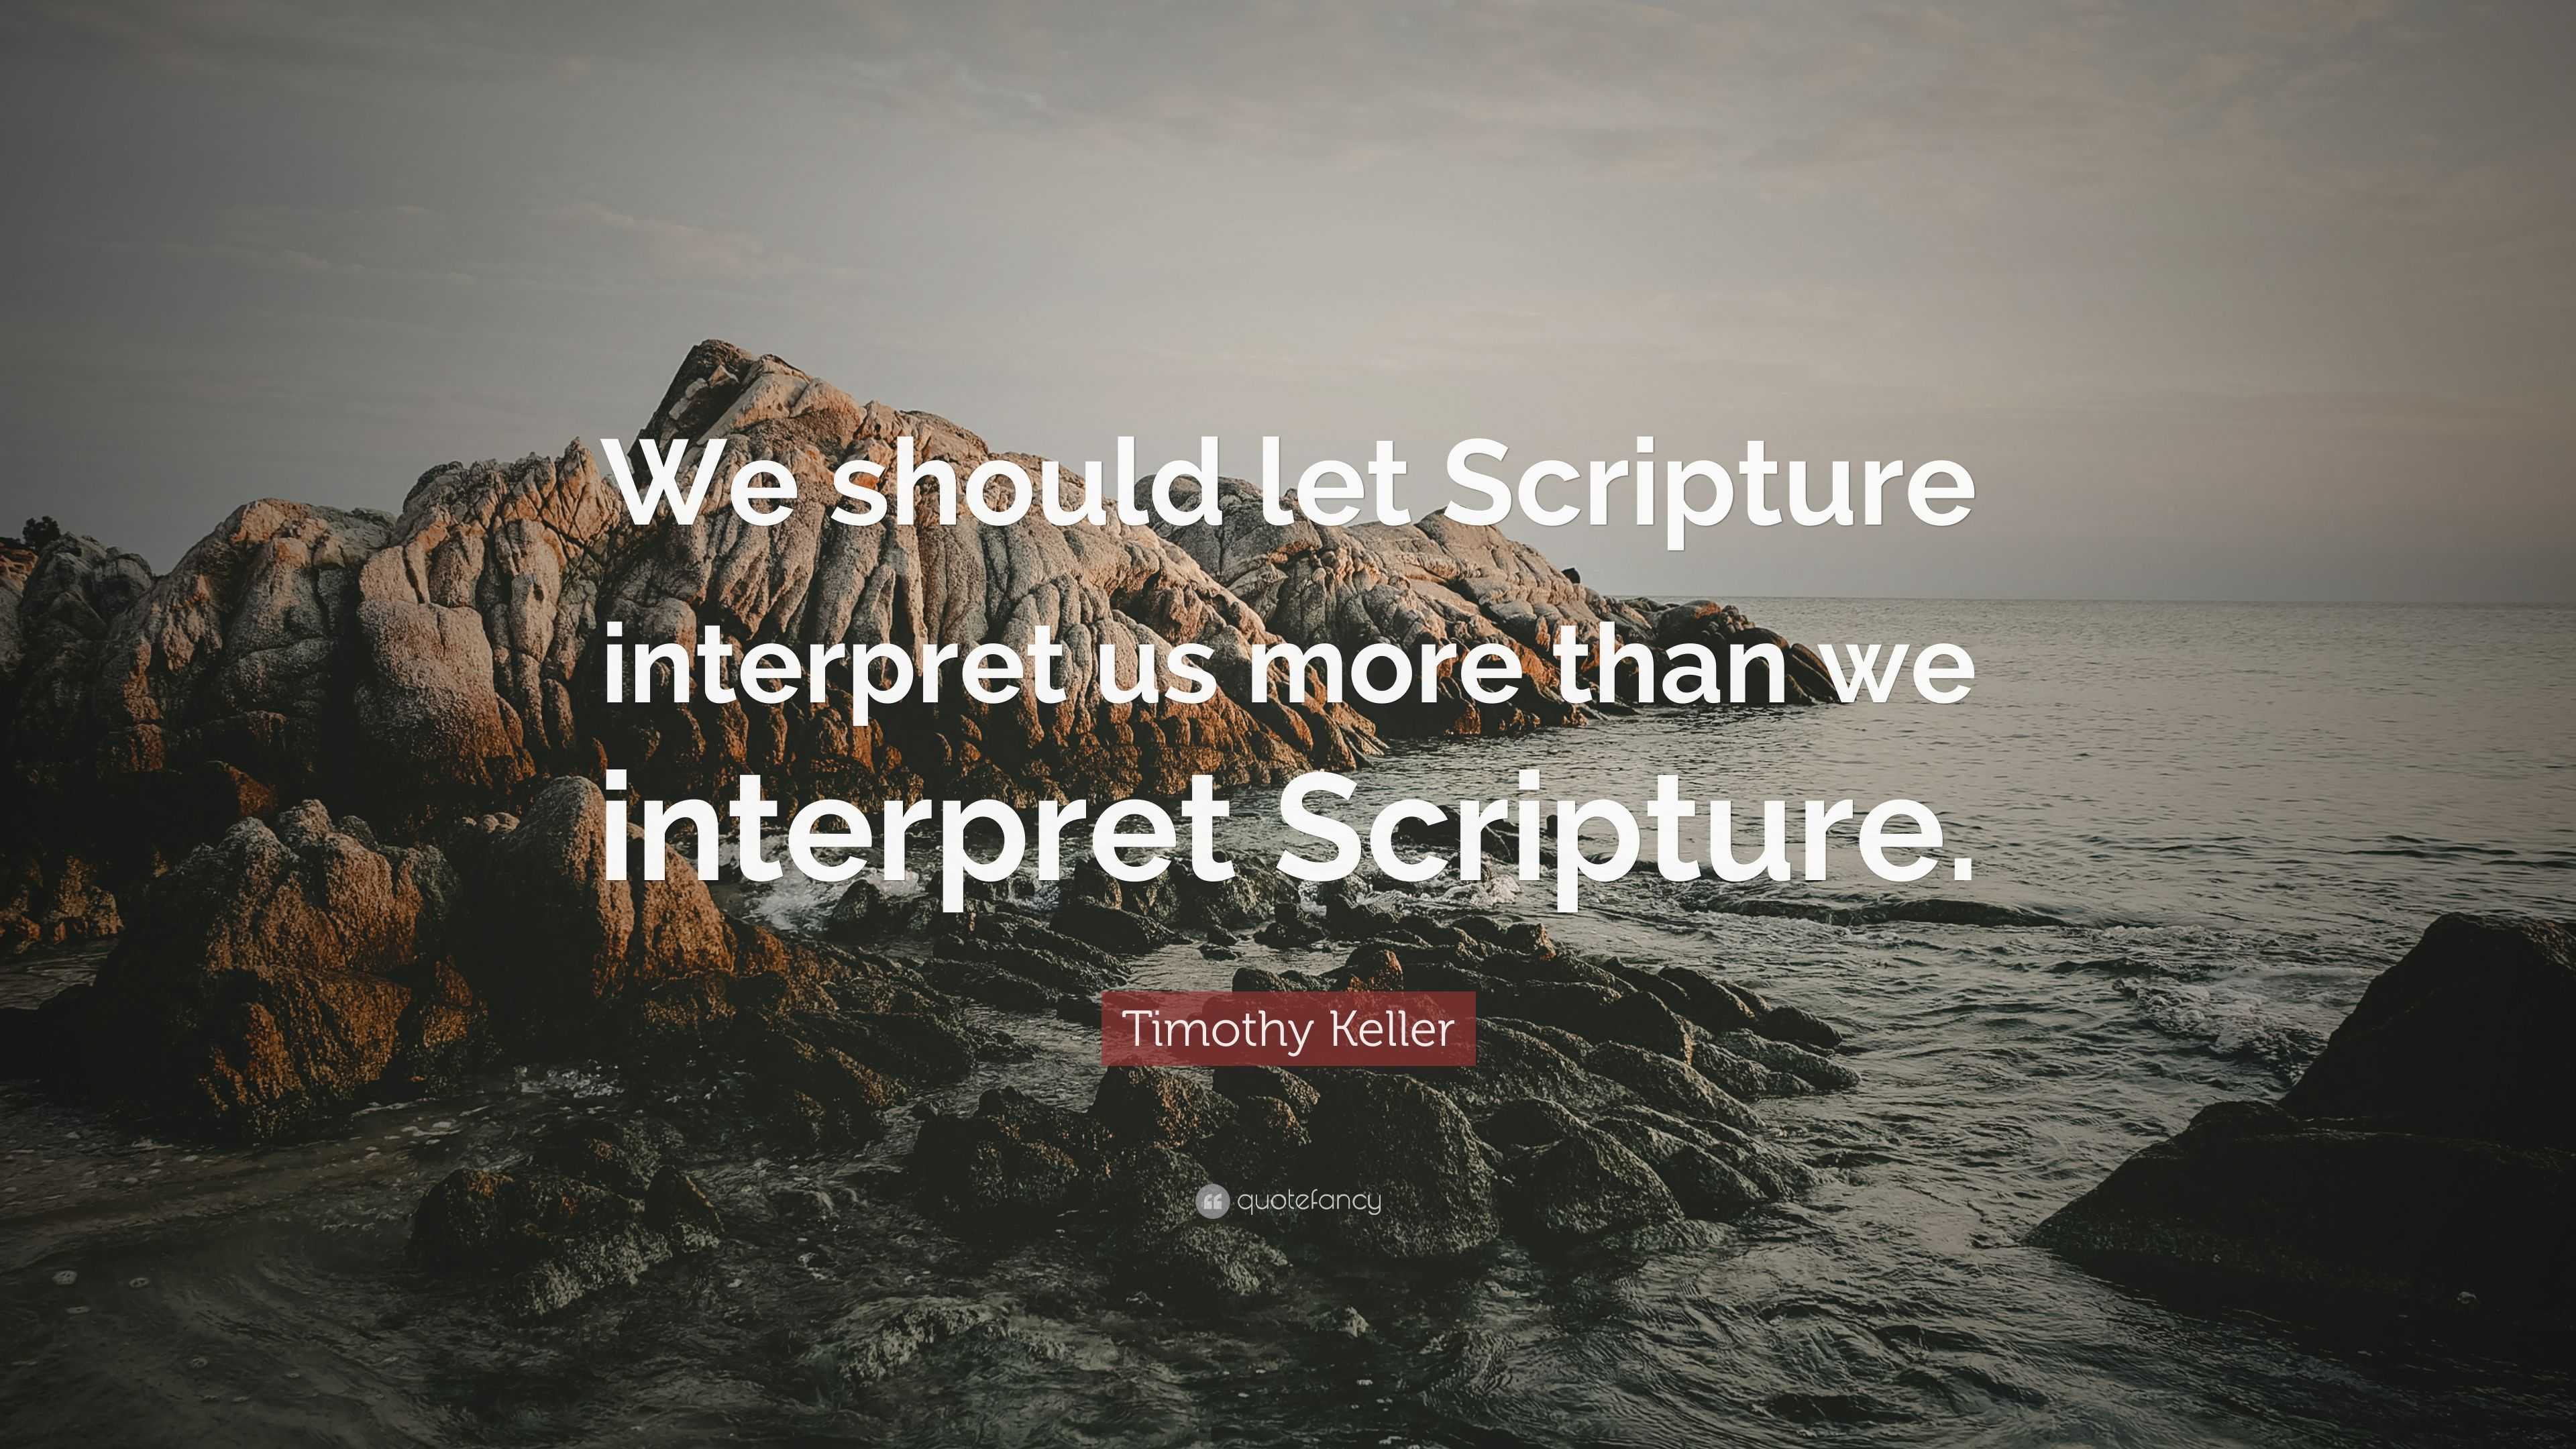 Timothy Keller Quote: “We should let Scripture interpret us more than ...